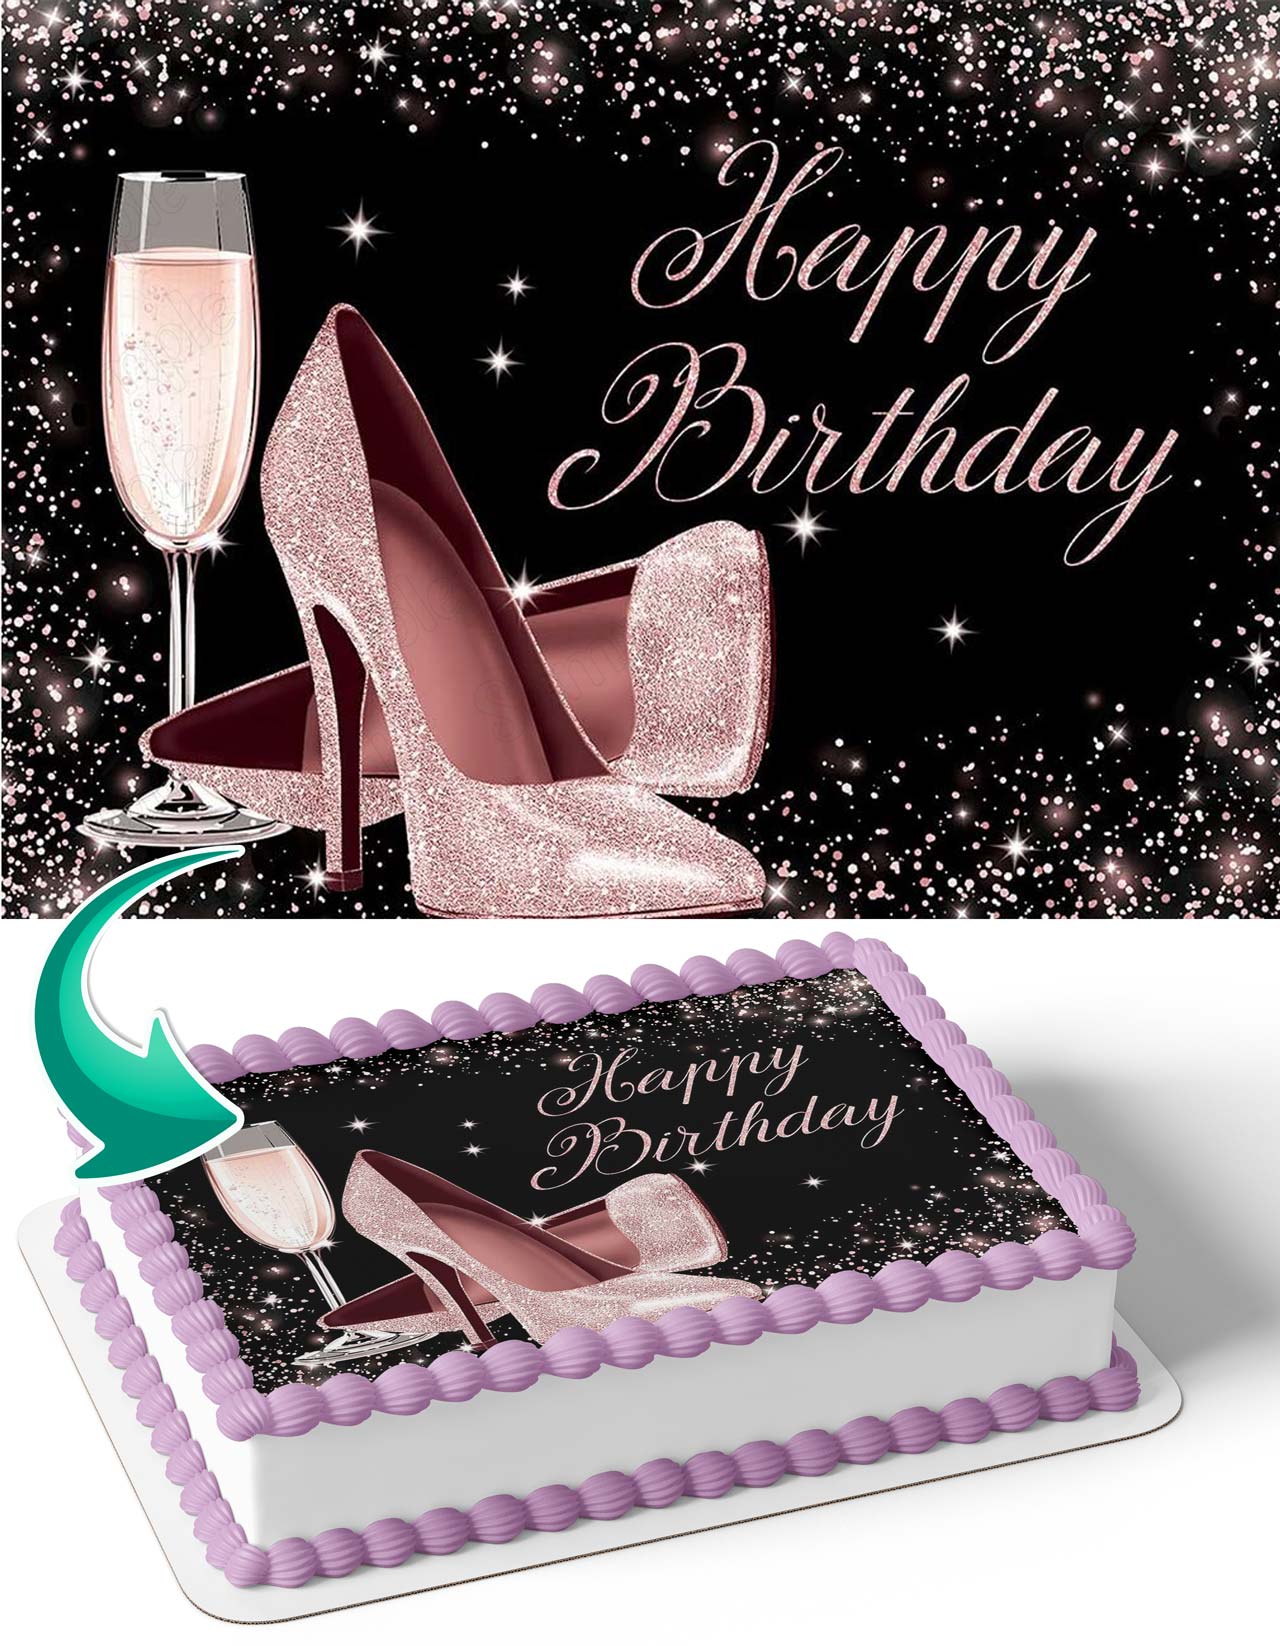 Cake Works - Hand-made fondant high-heel shoe cake topper on a birthday cake!  | Facebook